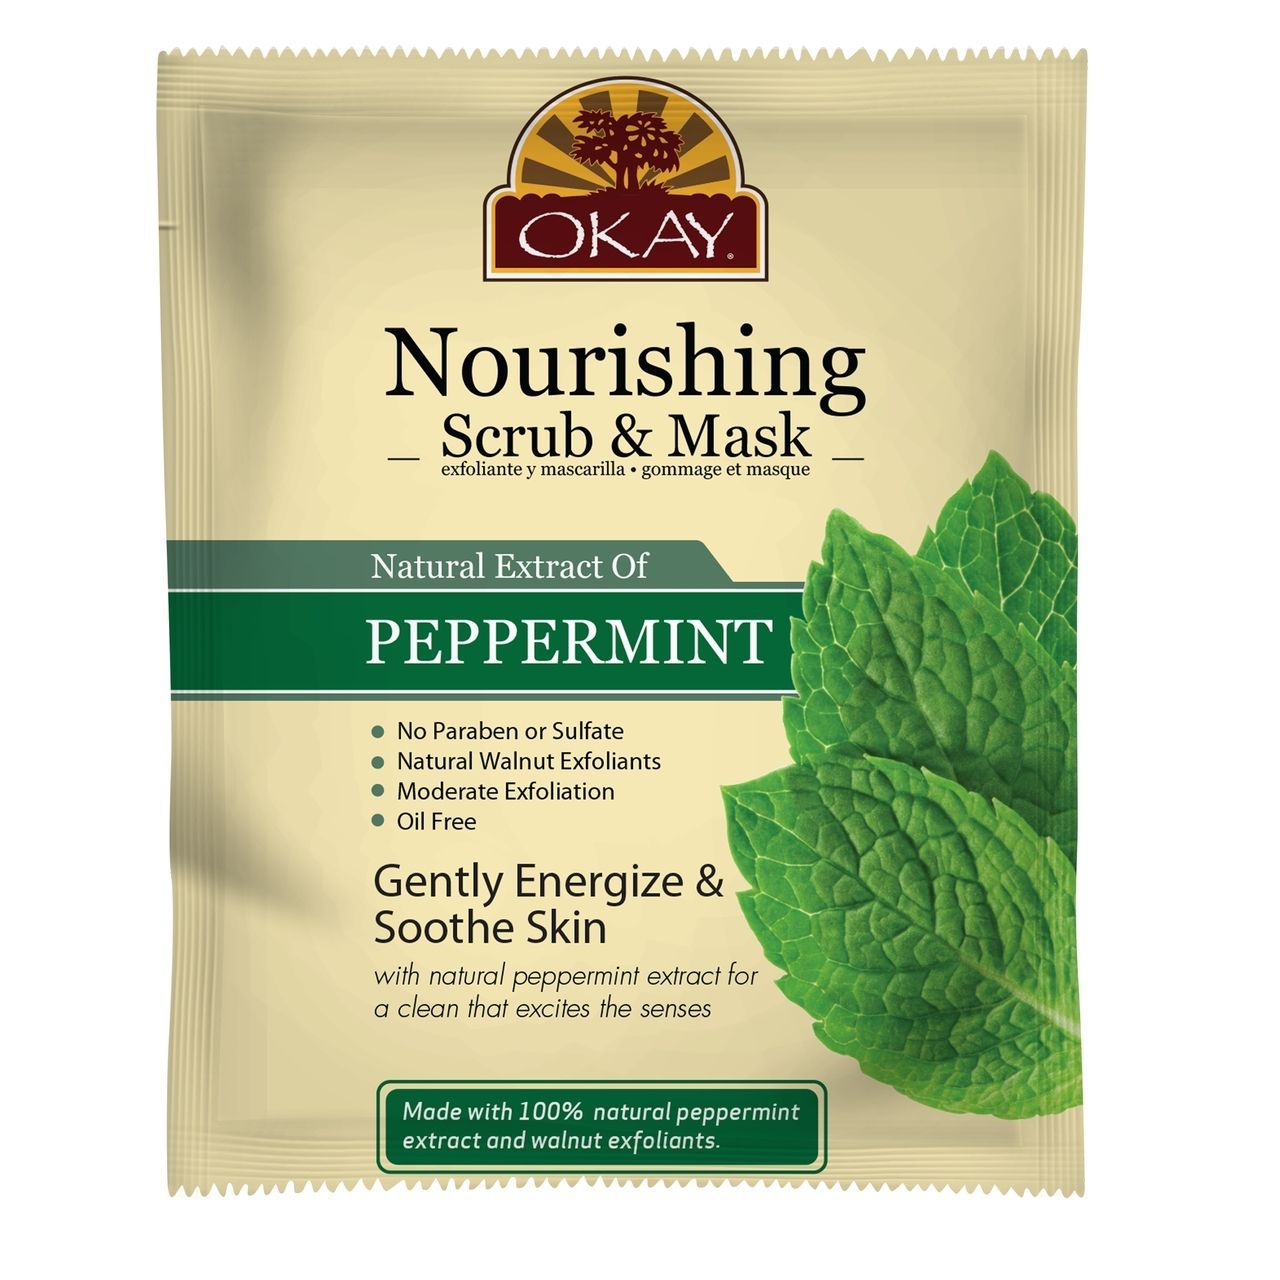 Peppermint Facial Scrub + Mask for Nourishing Skin 6oz - 4th Ave Market